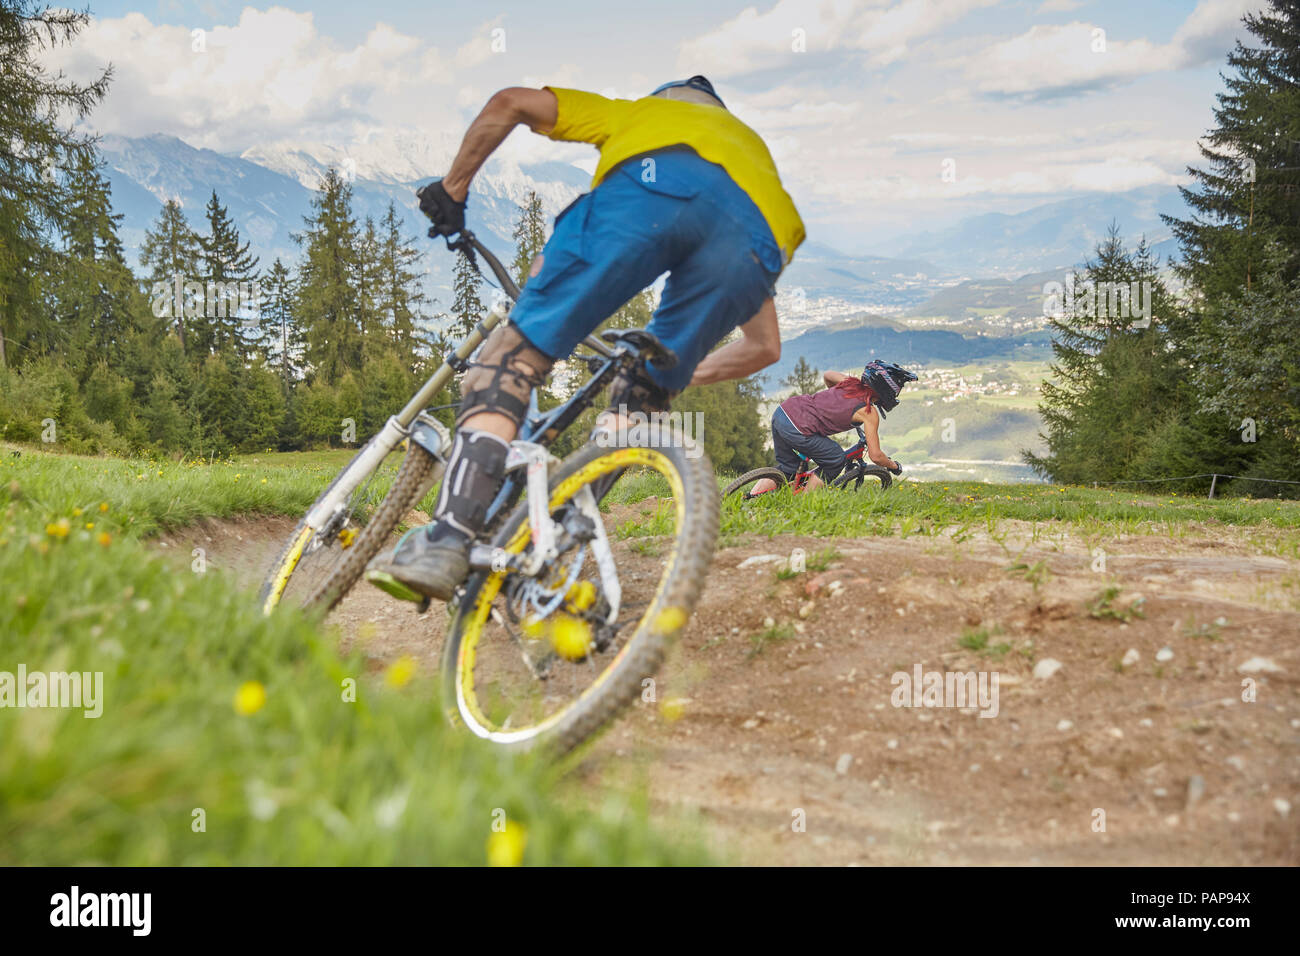 Austria, Tyrol, Downhill mountain biker Stock Photo